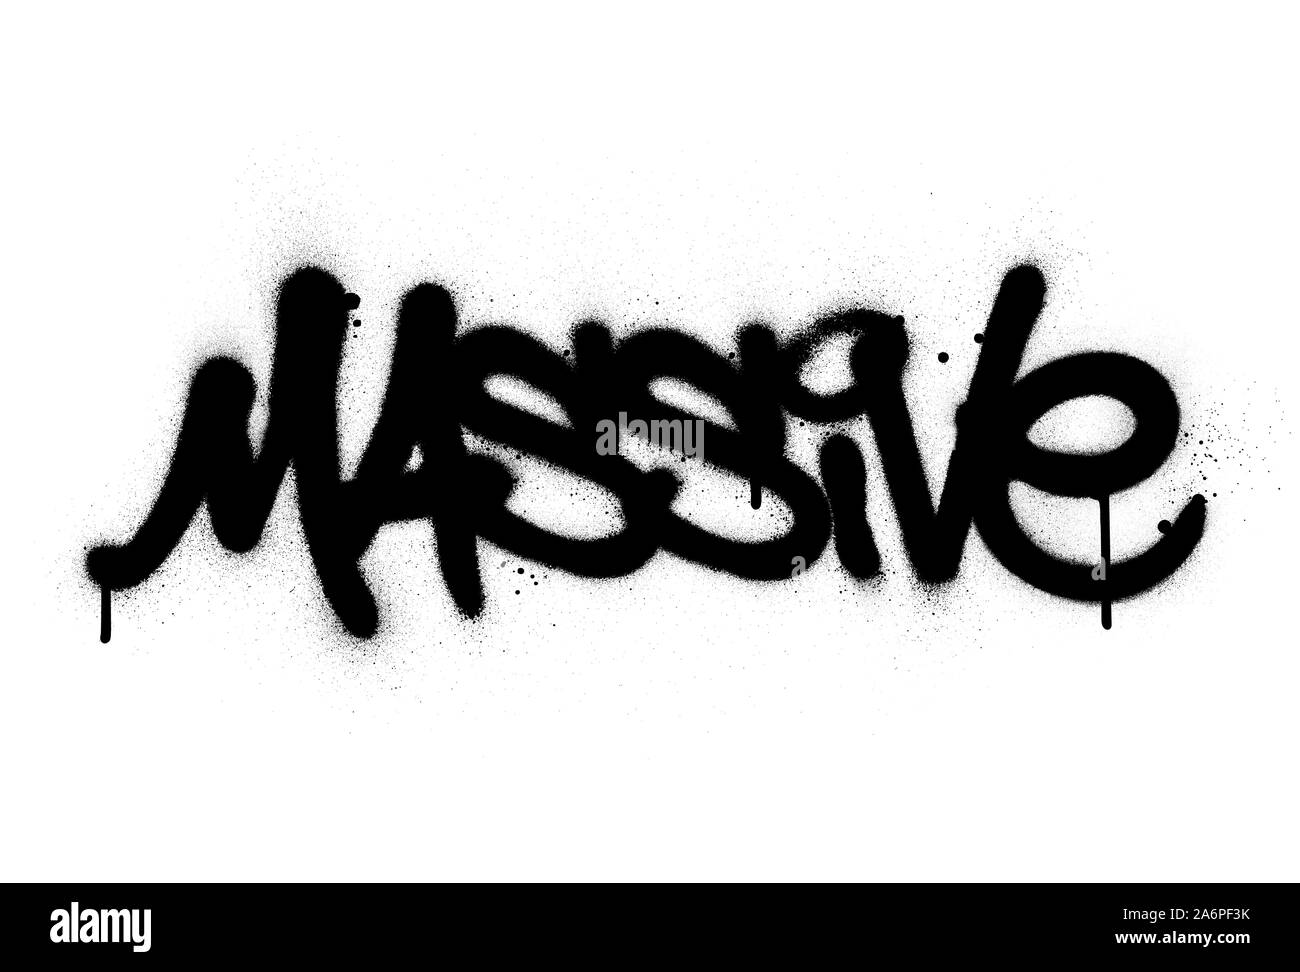 graffiti massive word in black over white Stock Vector